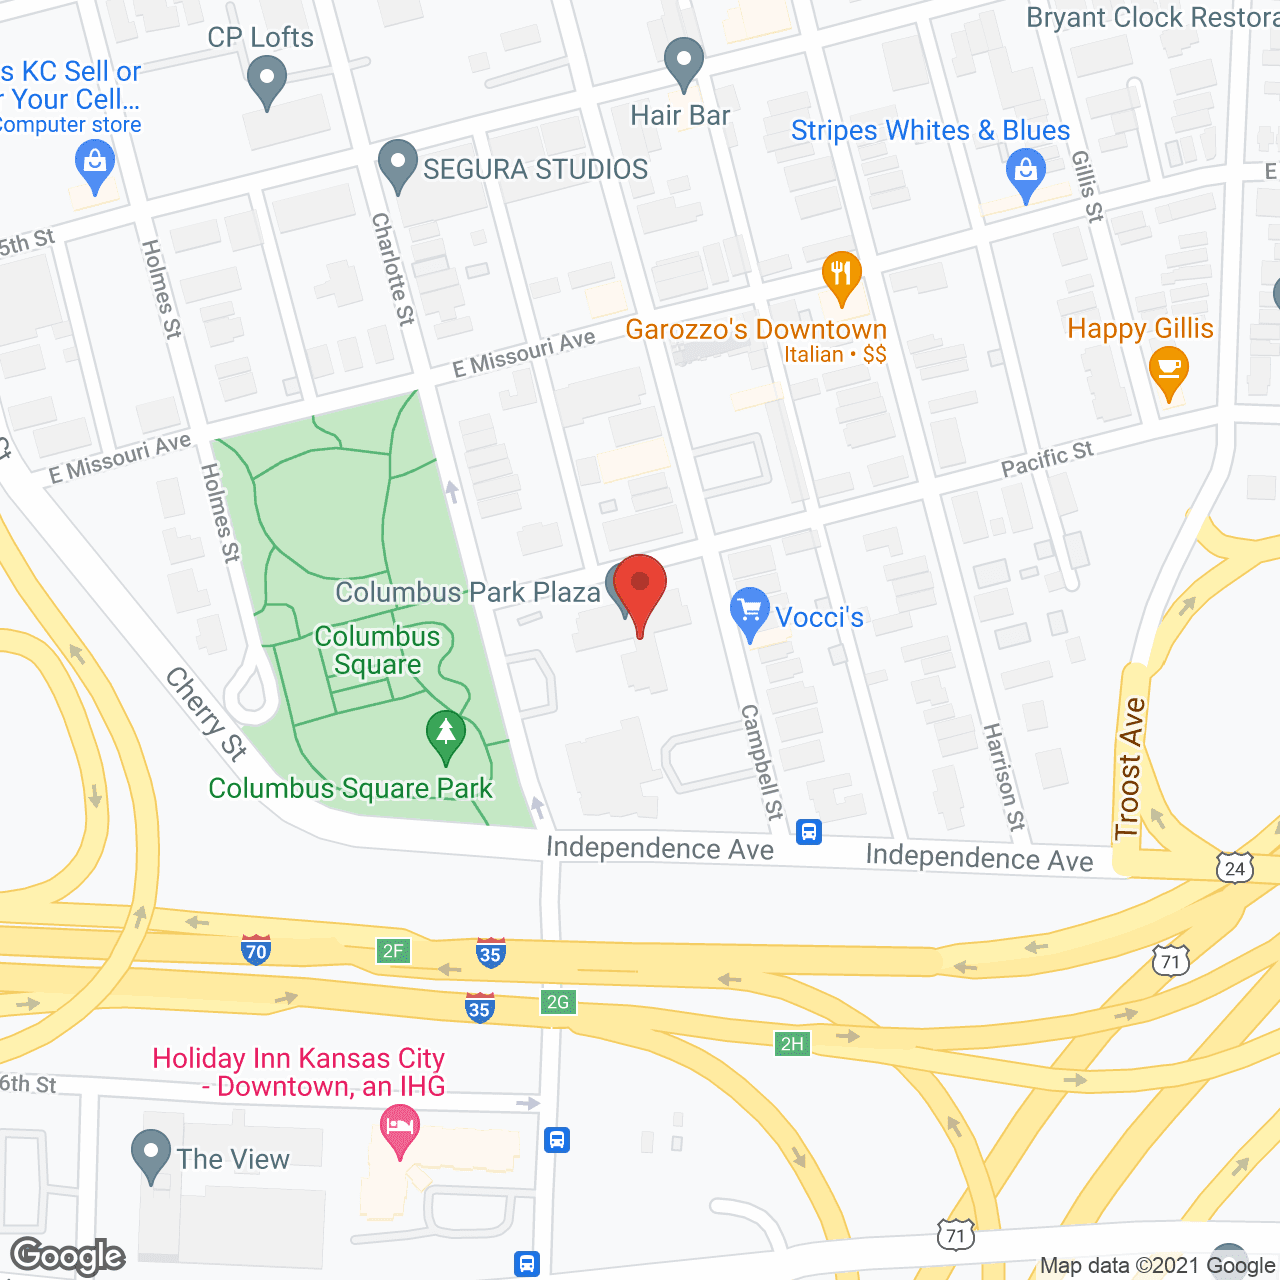 Columbus Park Plaza in google map